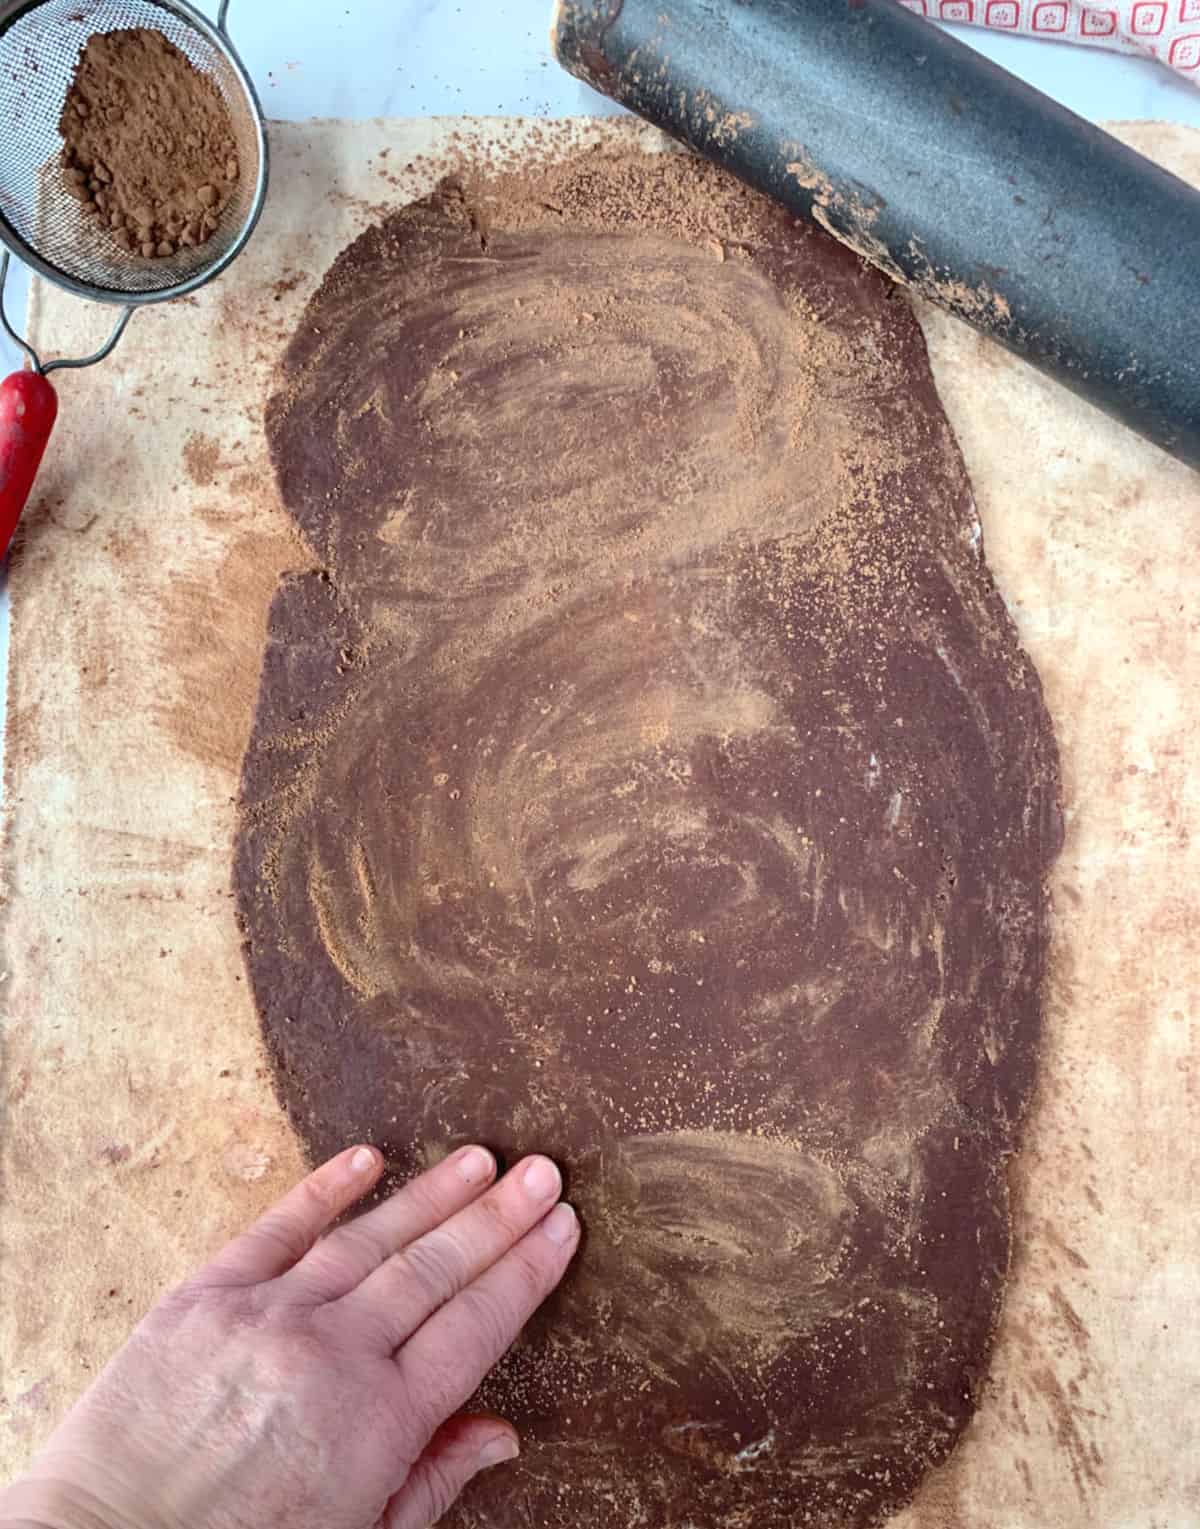 Rolled choclate tart dough.